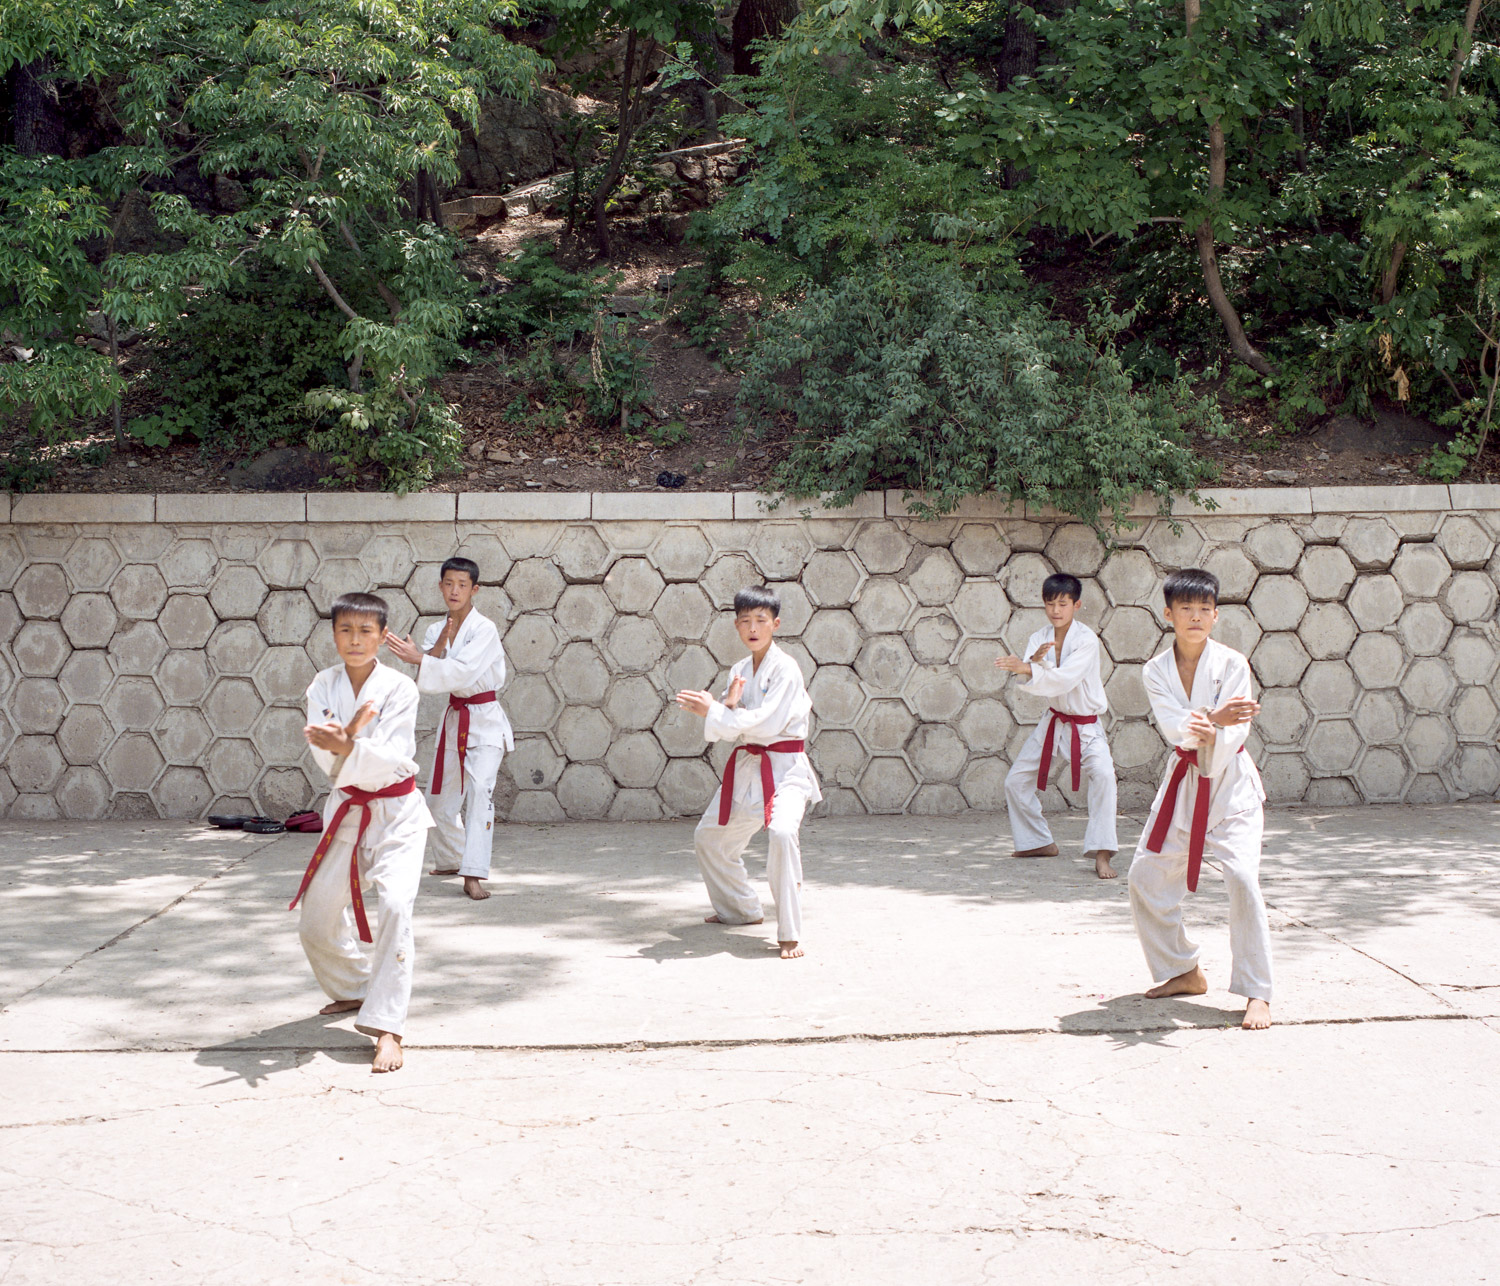  Young children practicing Taekwondo. 